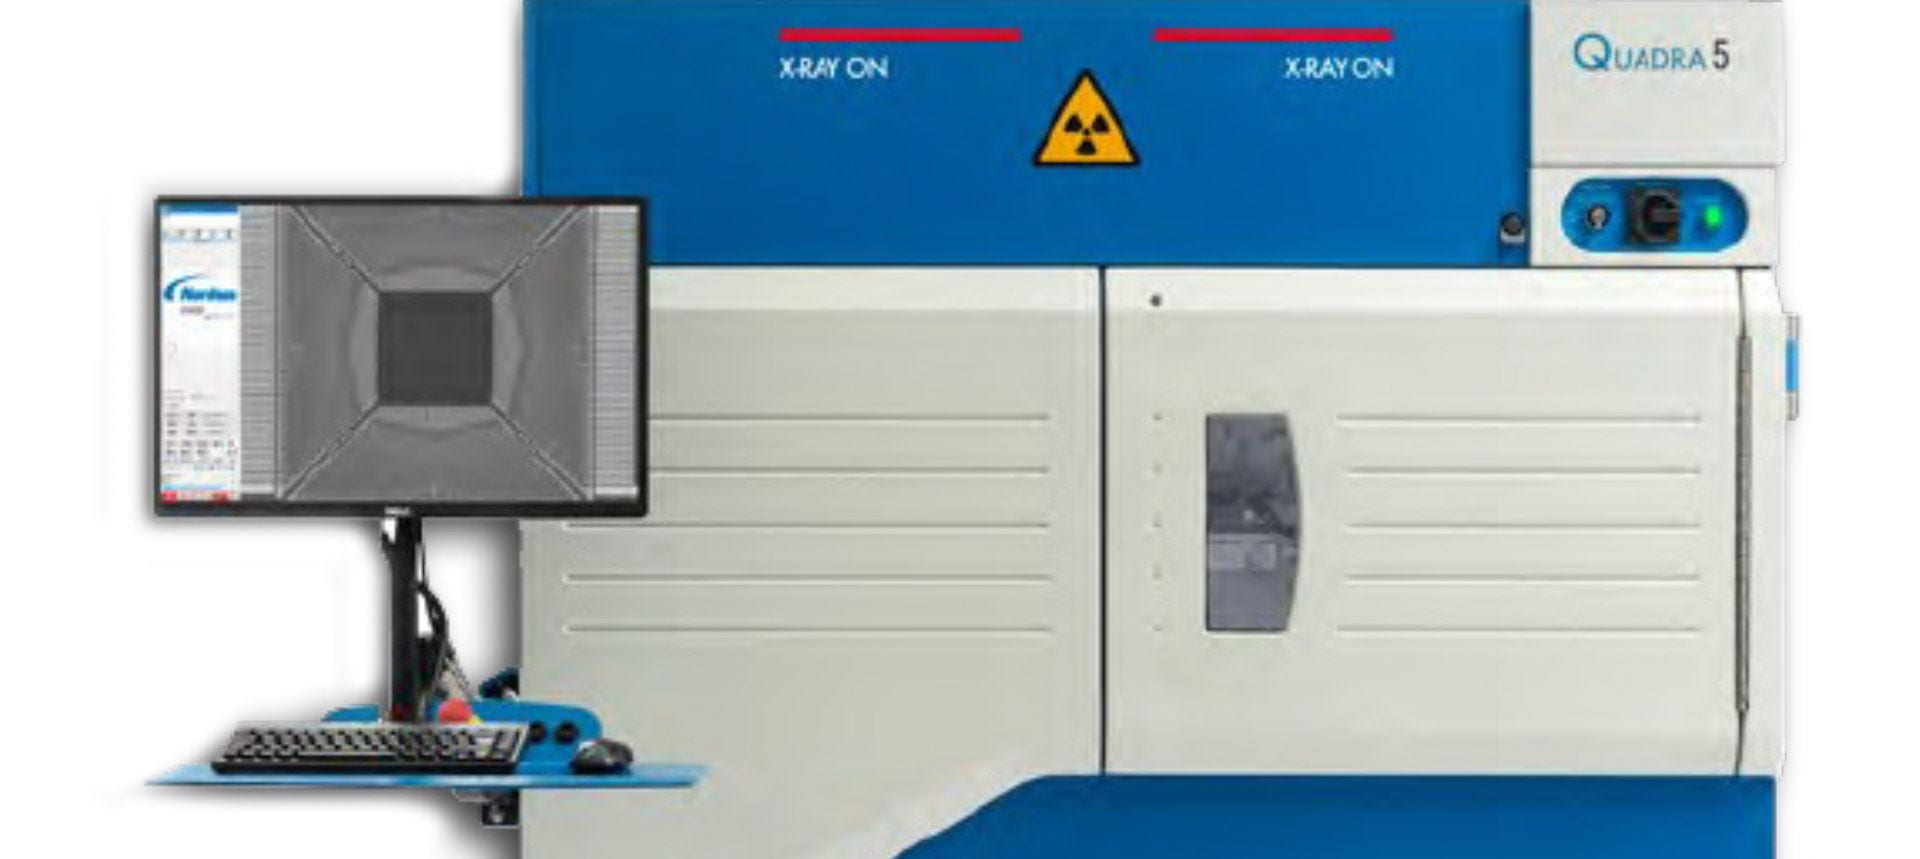 QuadraV-X-ray-imager